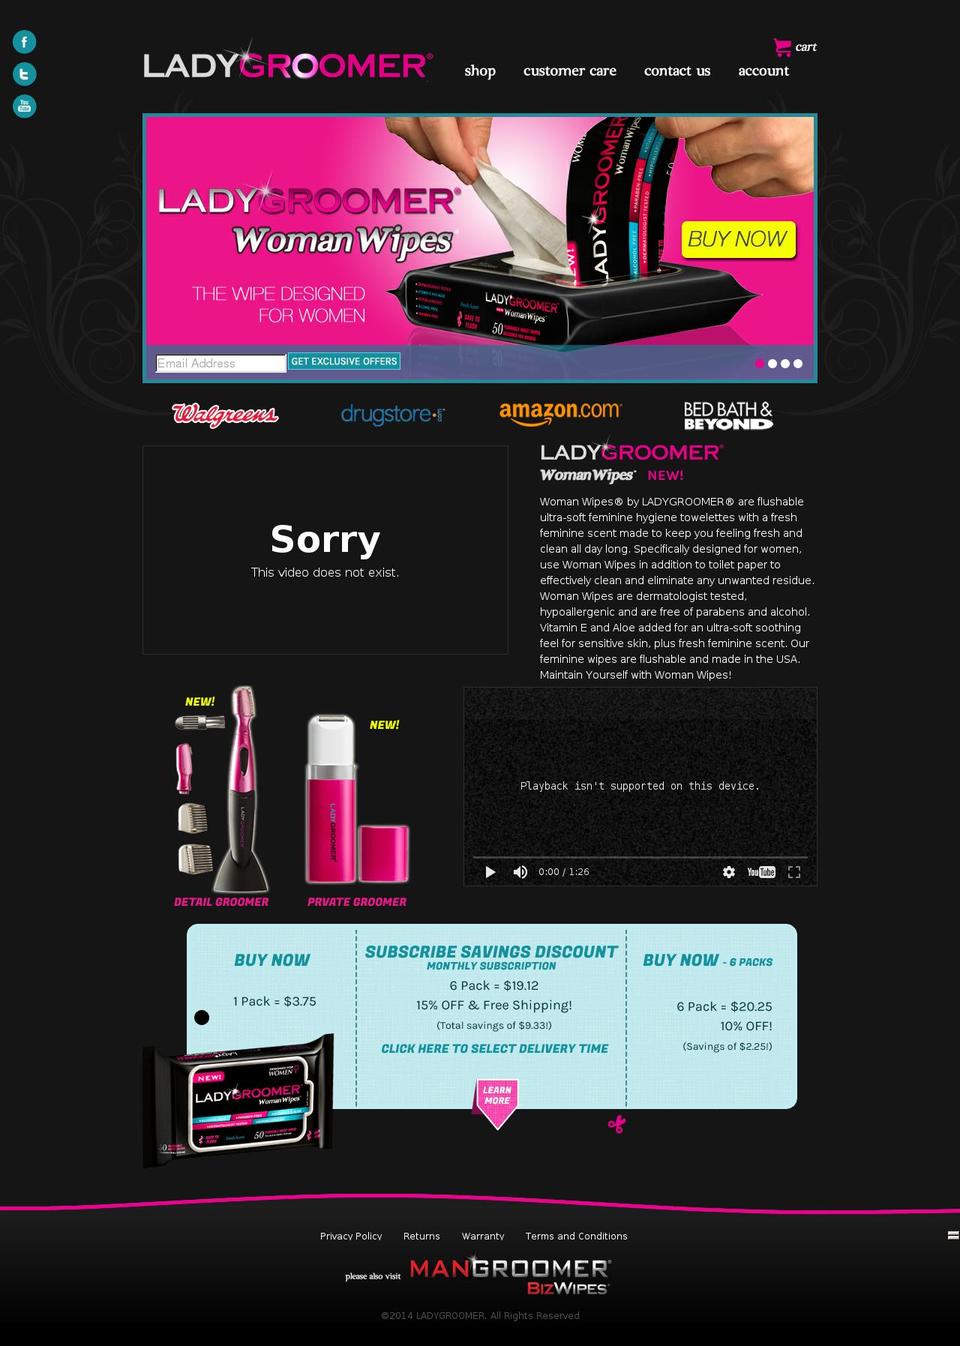 ladygroom.me shopify website screenshot